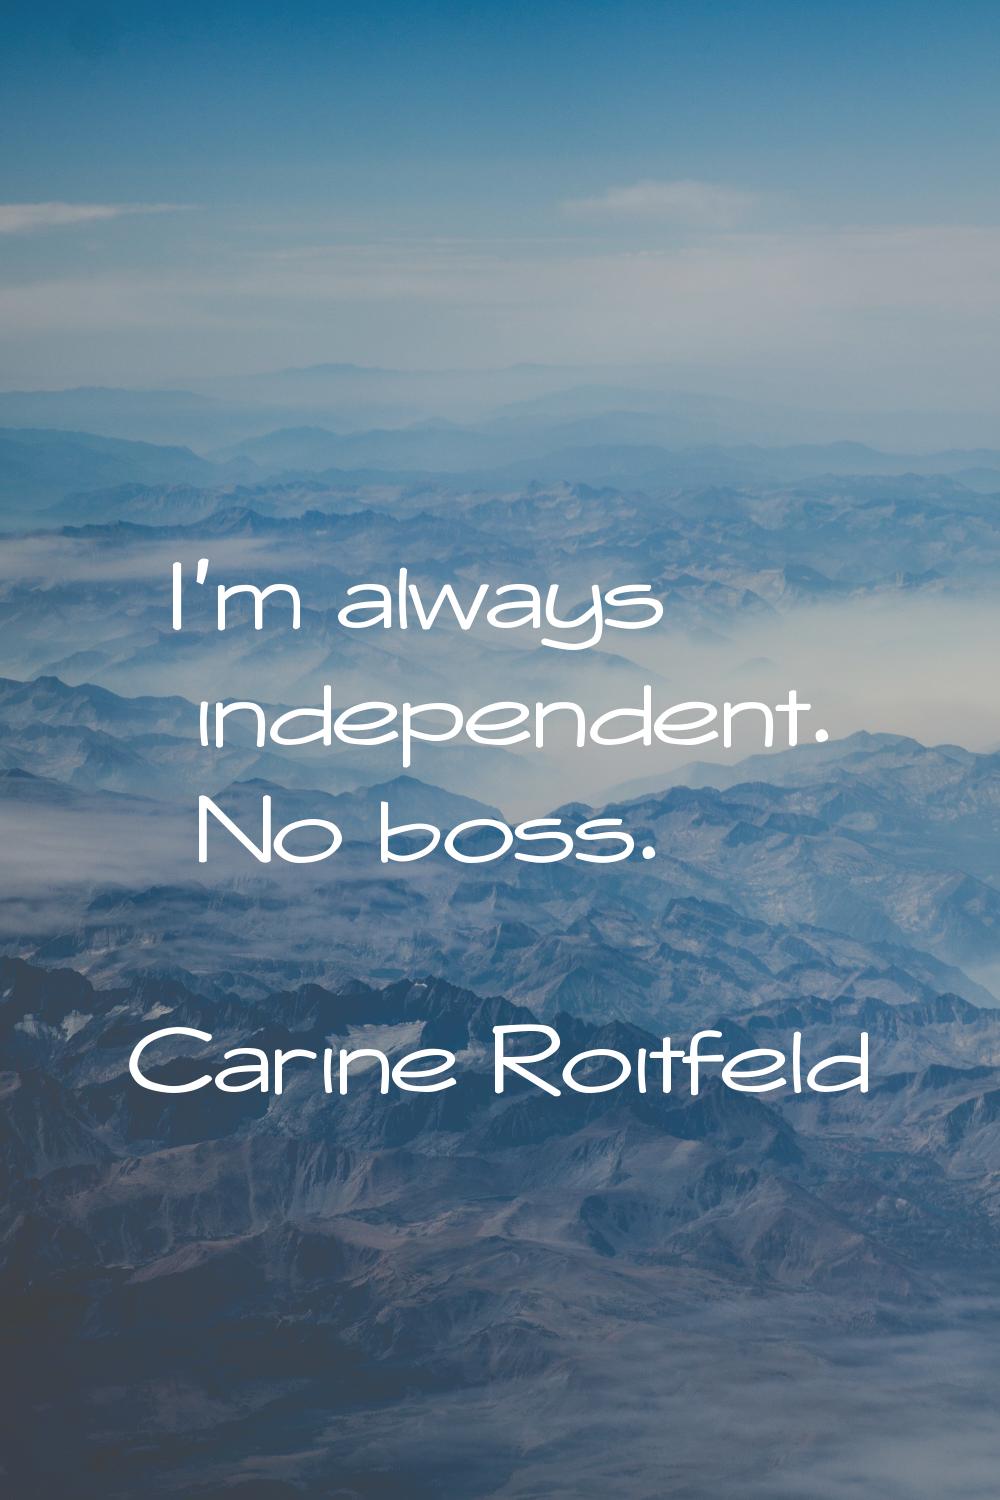 I'm always independent. No boss.